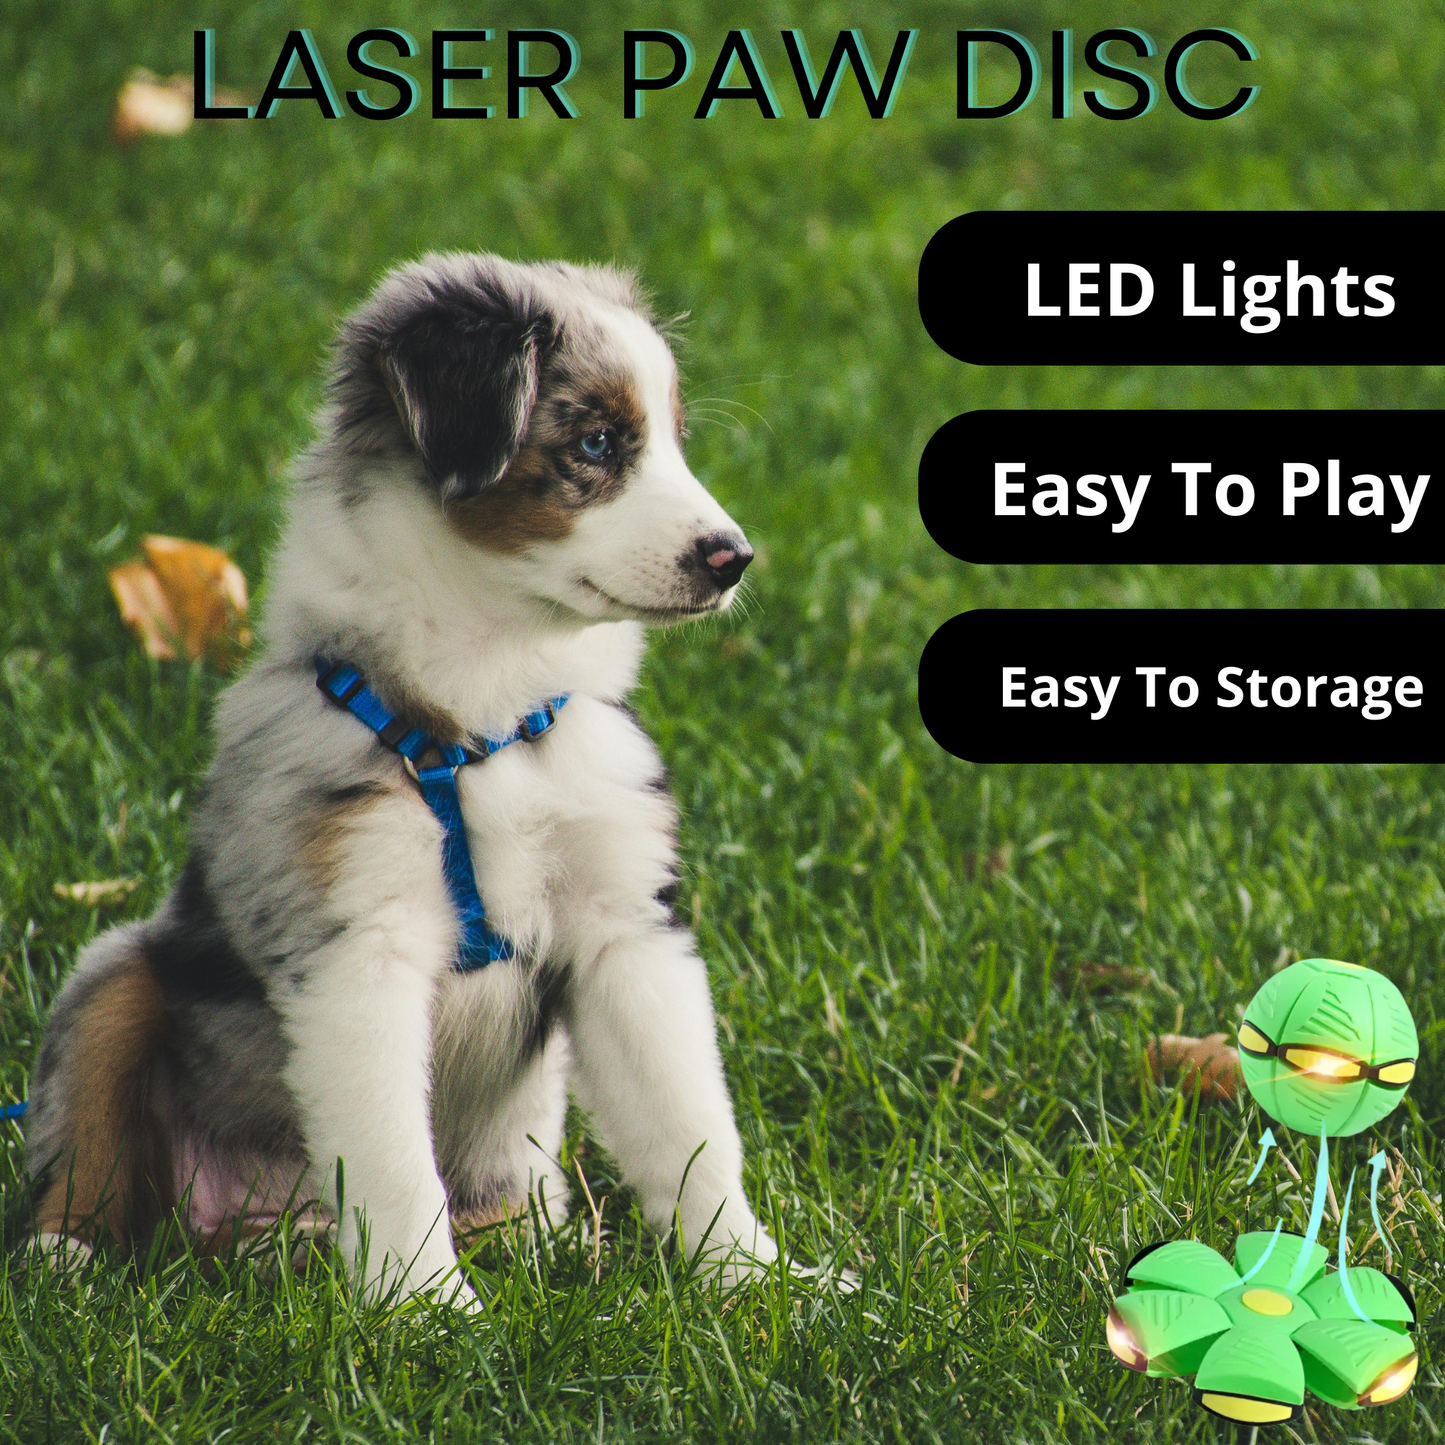 LaserPaw Disc